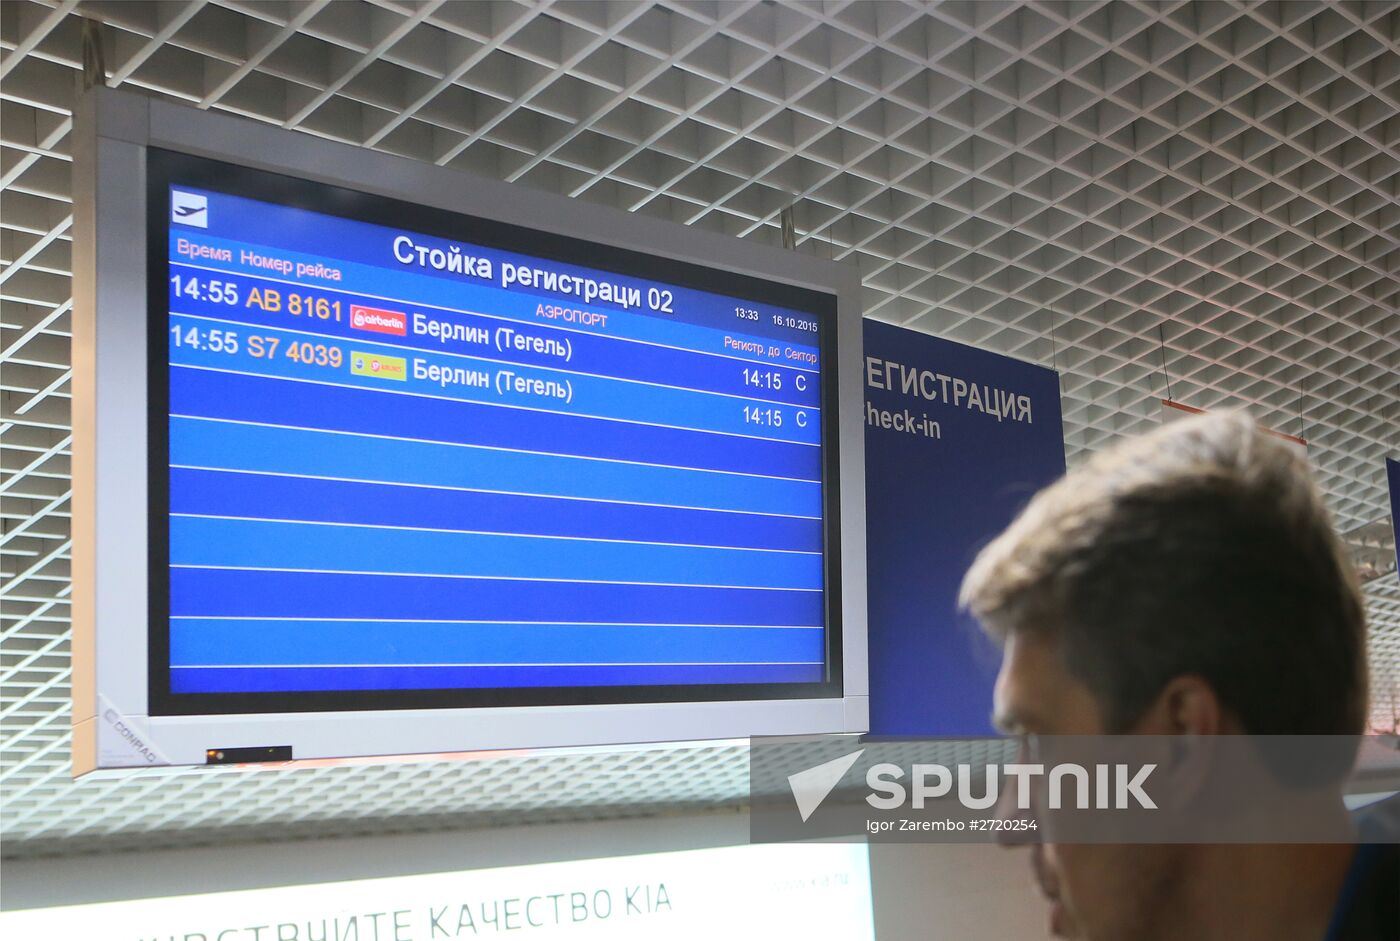 Air Berlin stops flights to Russia